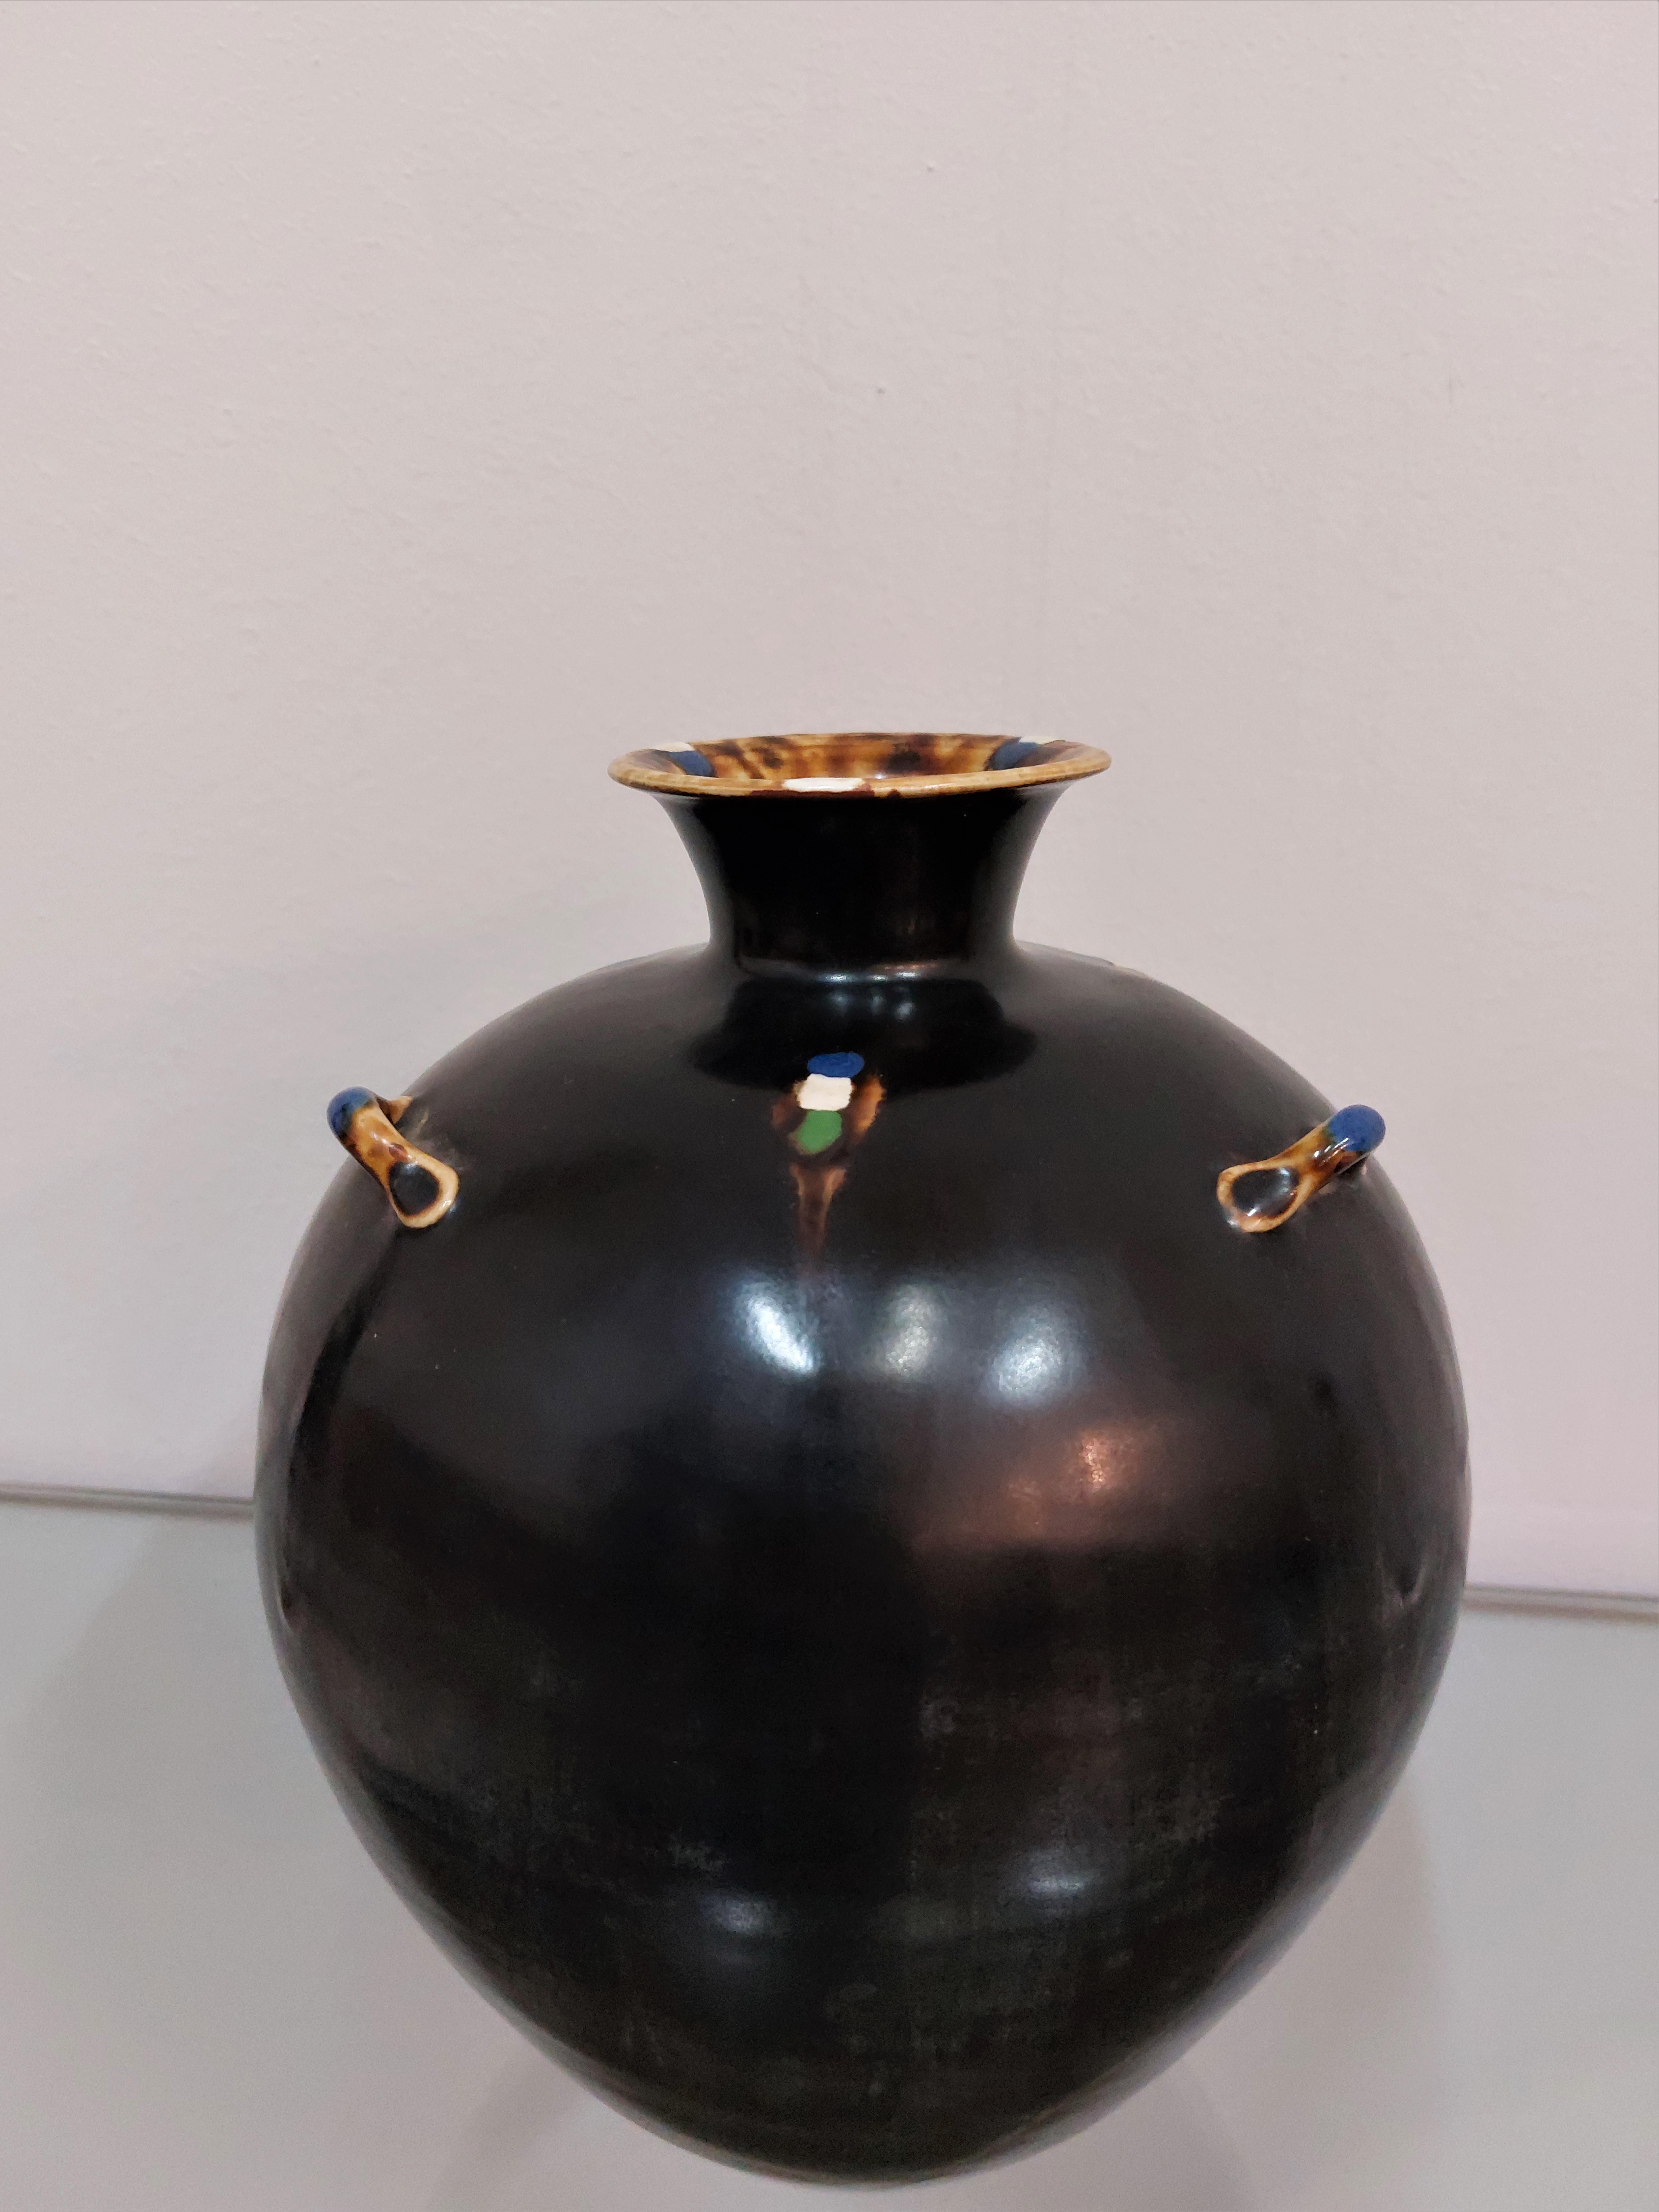 Decorative Object Ceramic Vase Enameled Black Midcentury Italian Design 1950s In Good Condition For Sale In Palermo, IT